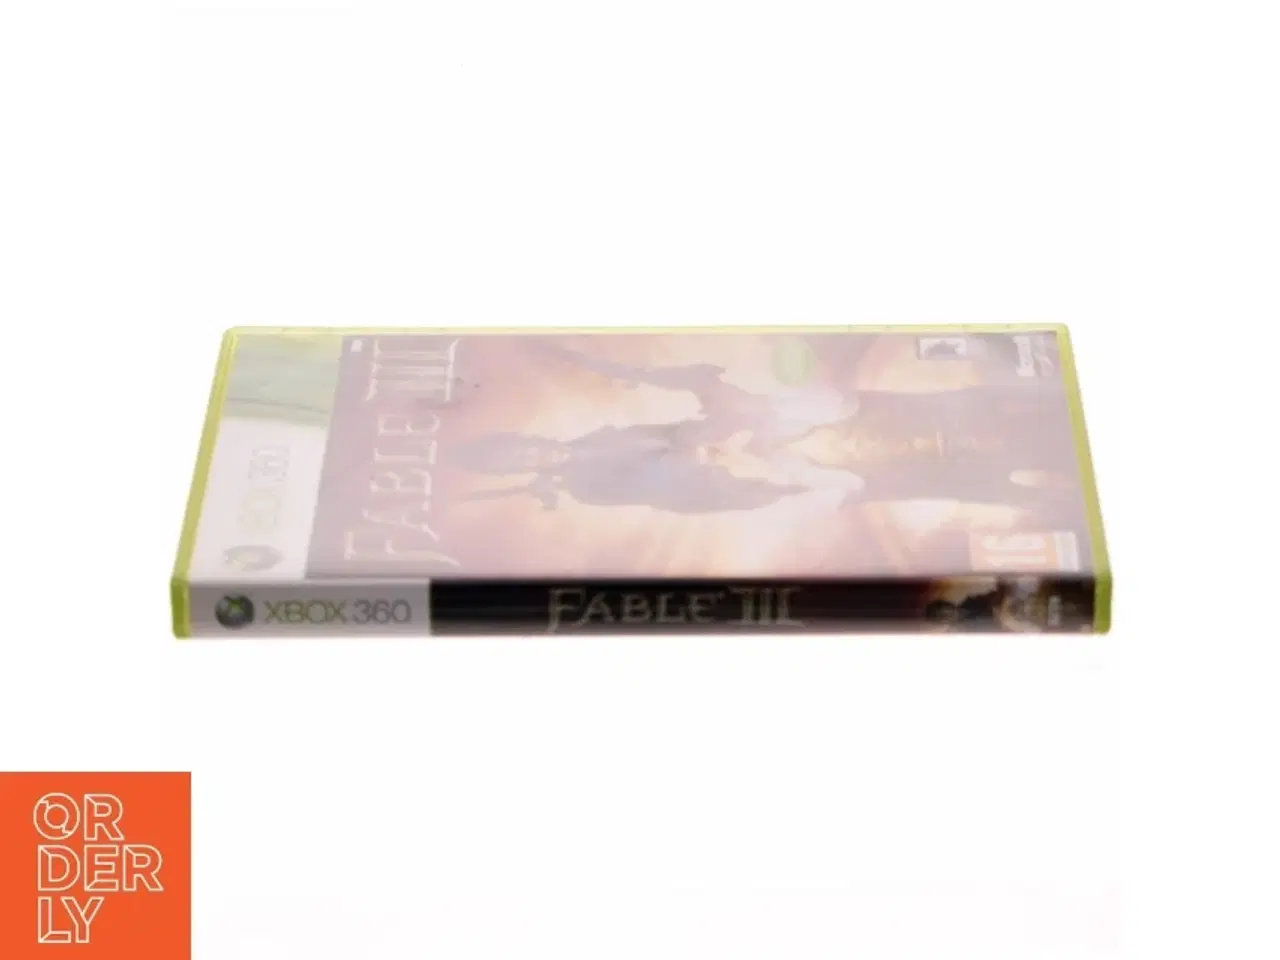 Billede 2 - Fable III Xbox 360 spil fra Microsoft